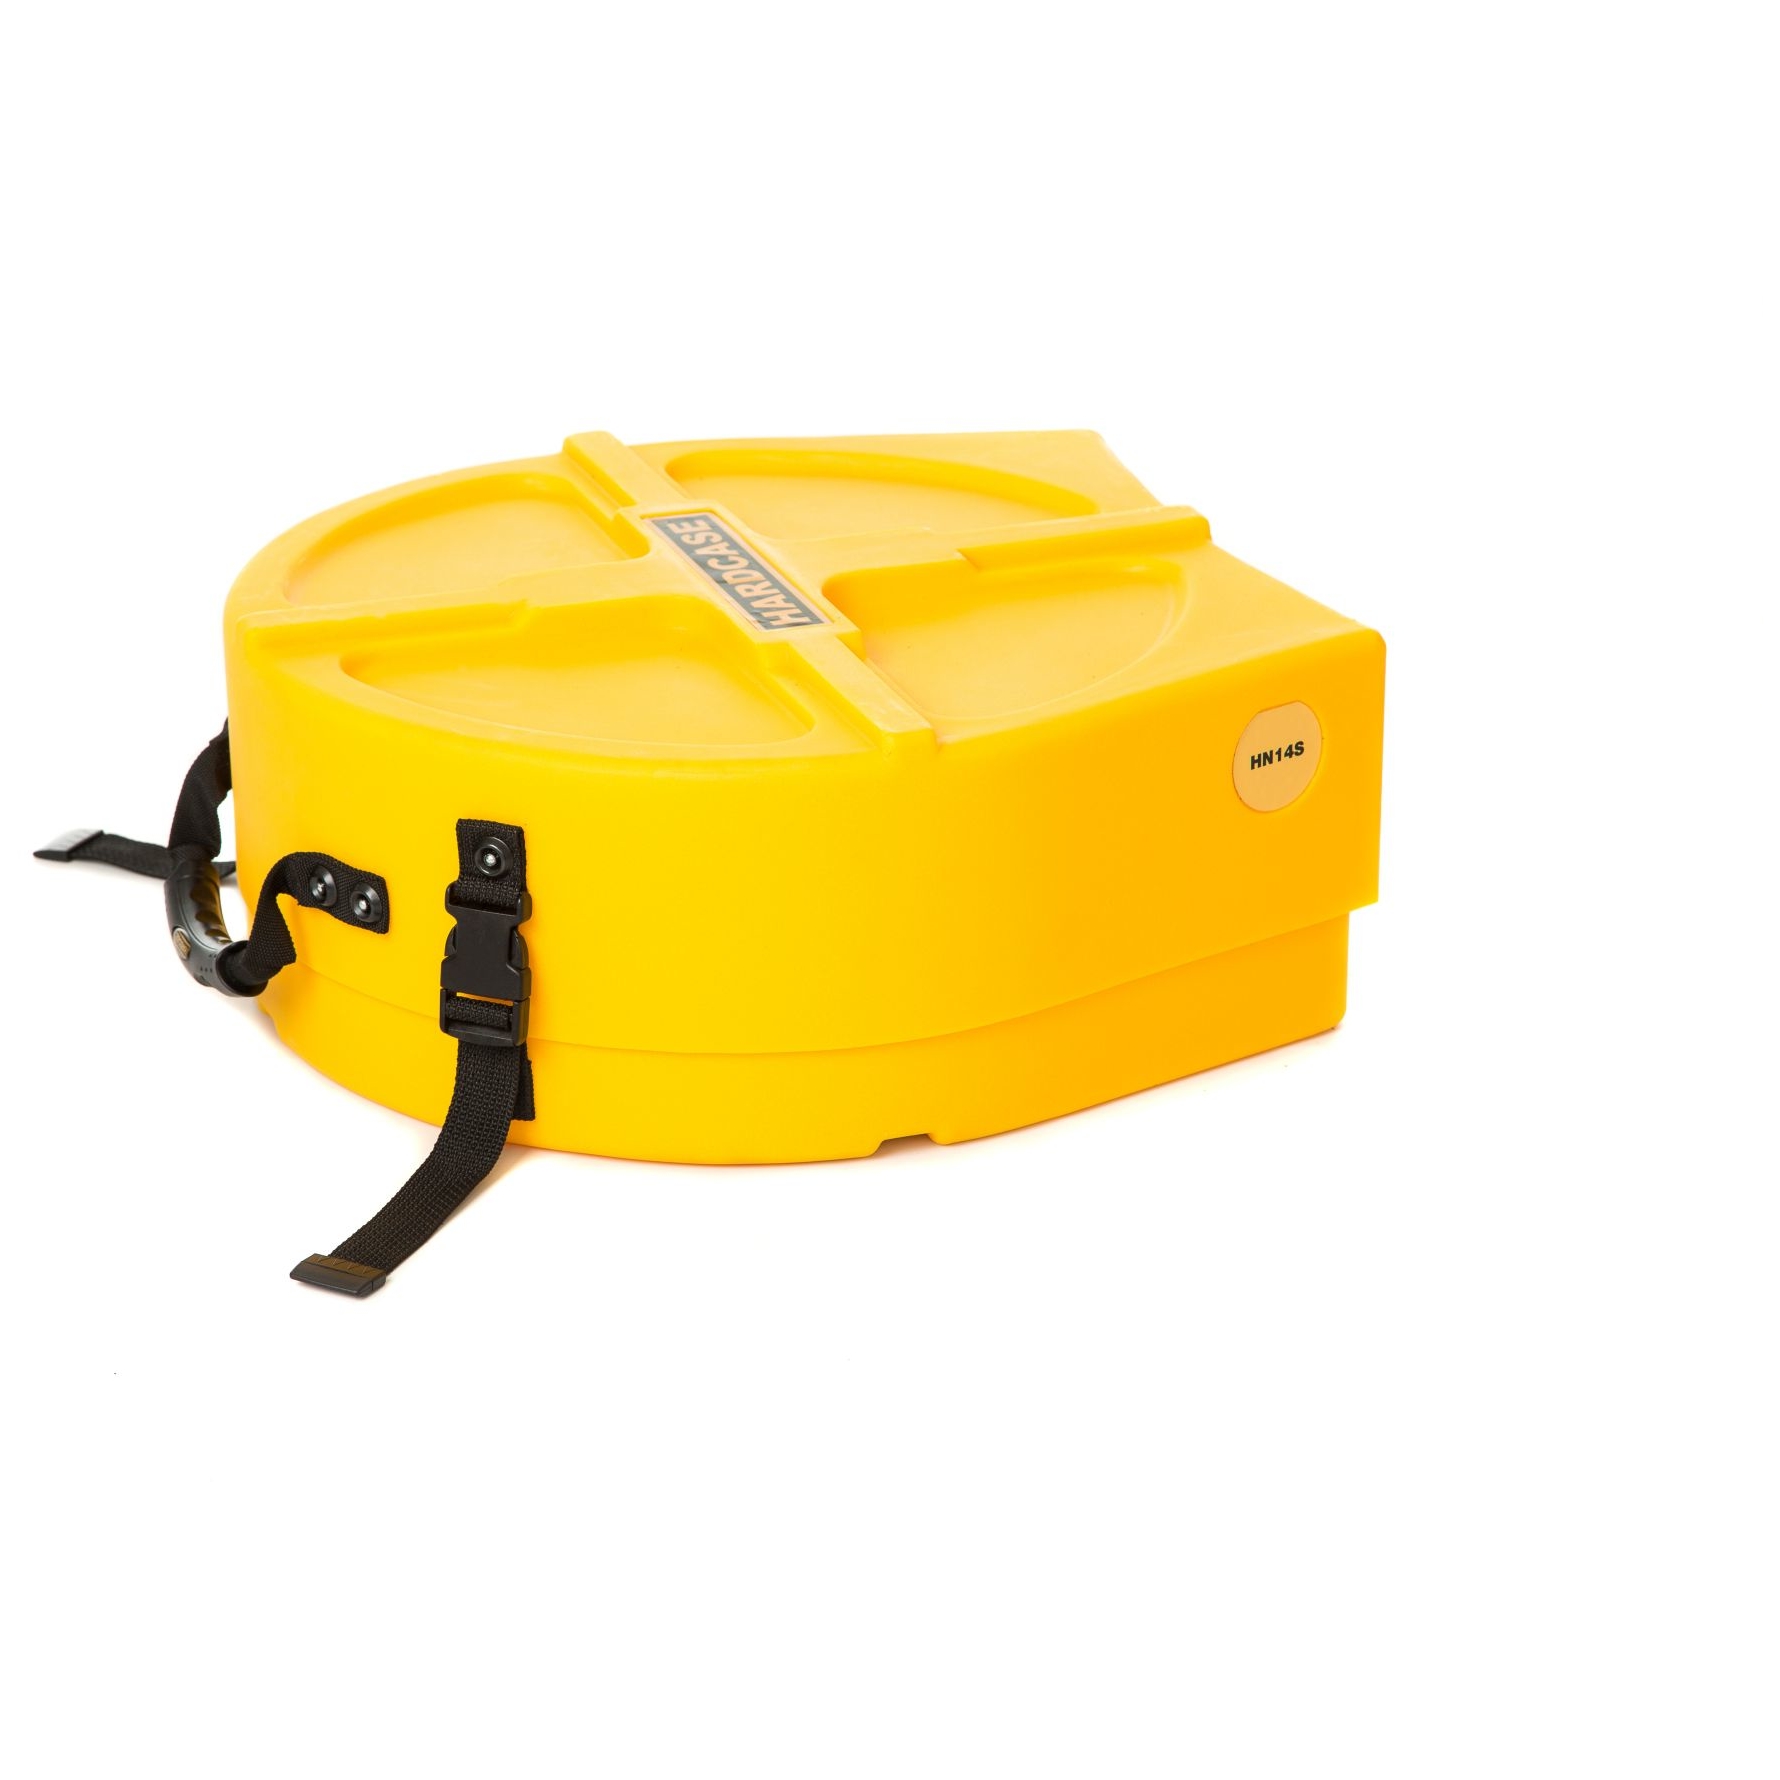 Hardcase HNL14S-Y Snare Case 14" (5“ – 8“) - Yellow / komplett gepolstert